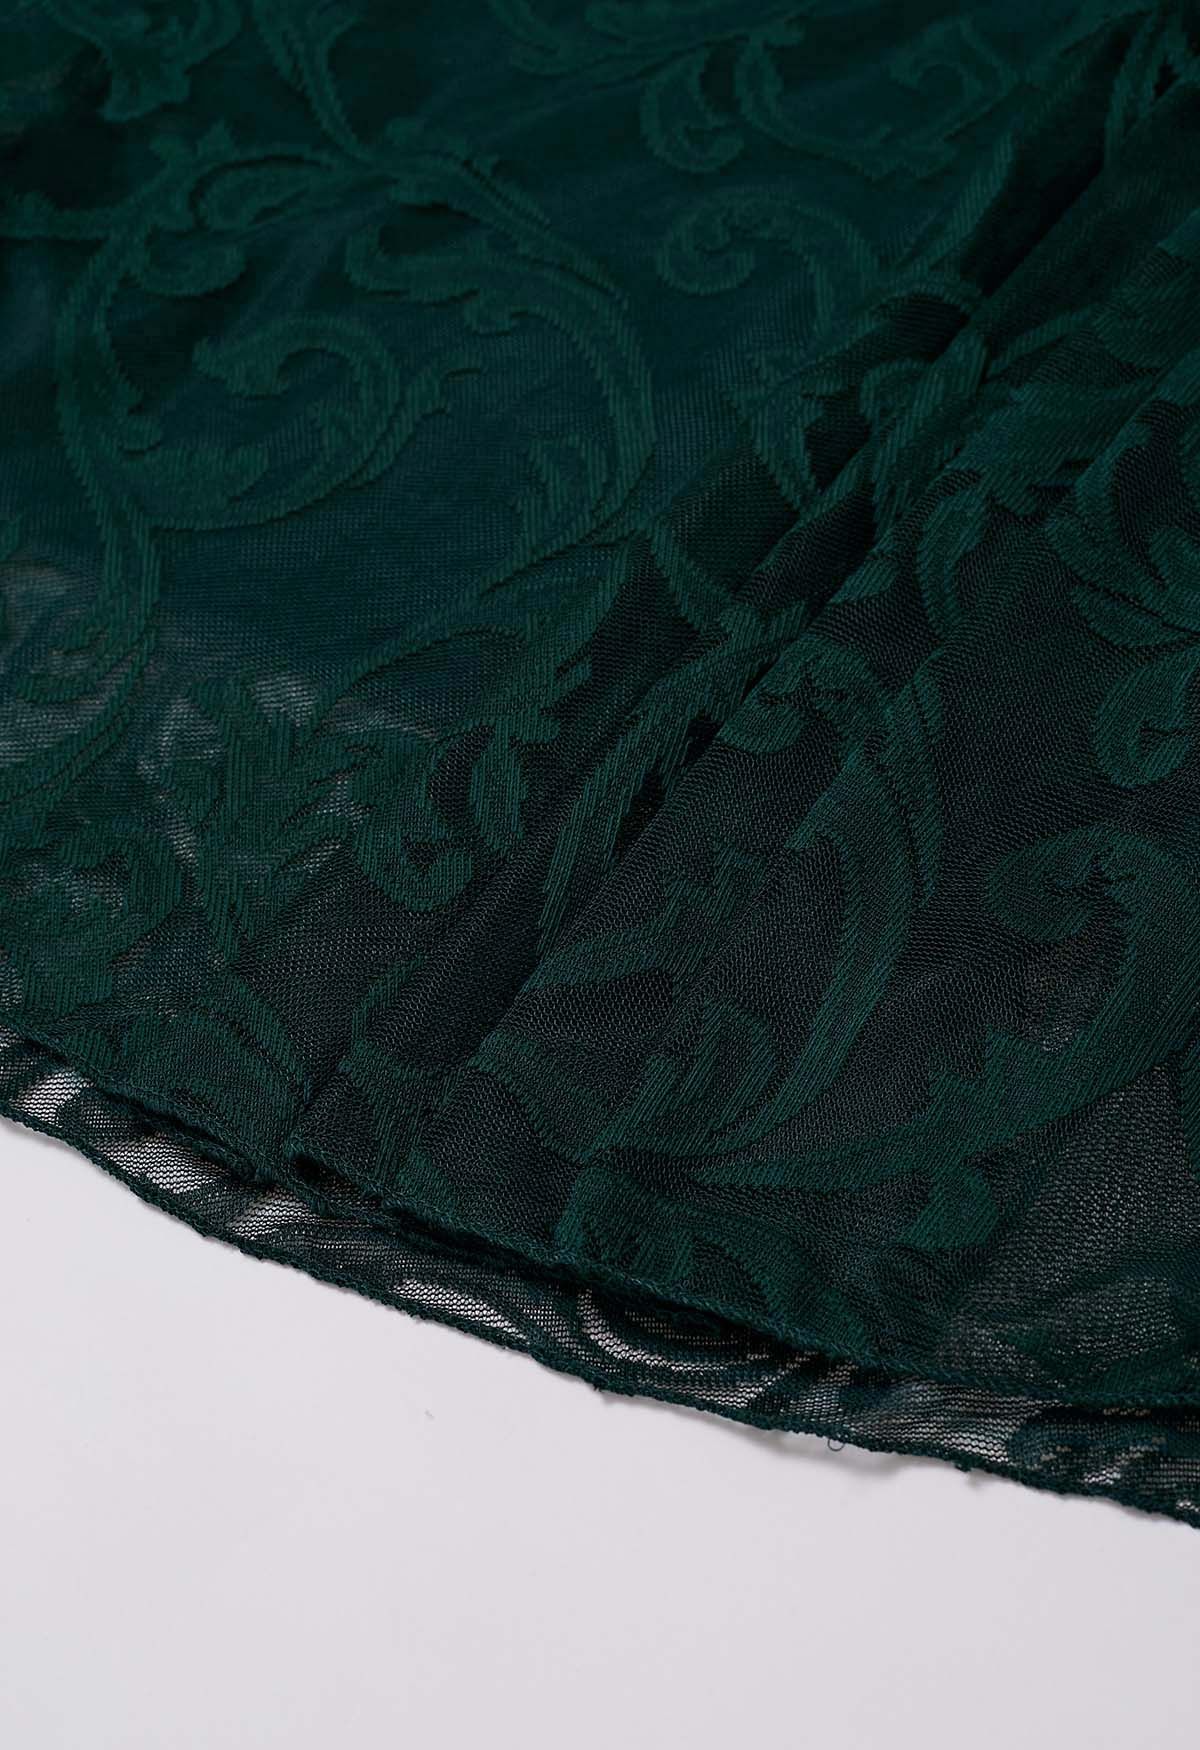 Falda midi de tul de malla floral sofisticada en verde oscuro